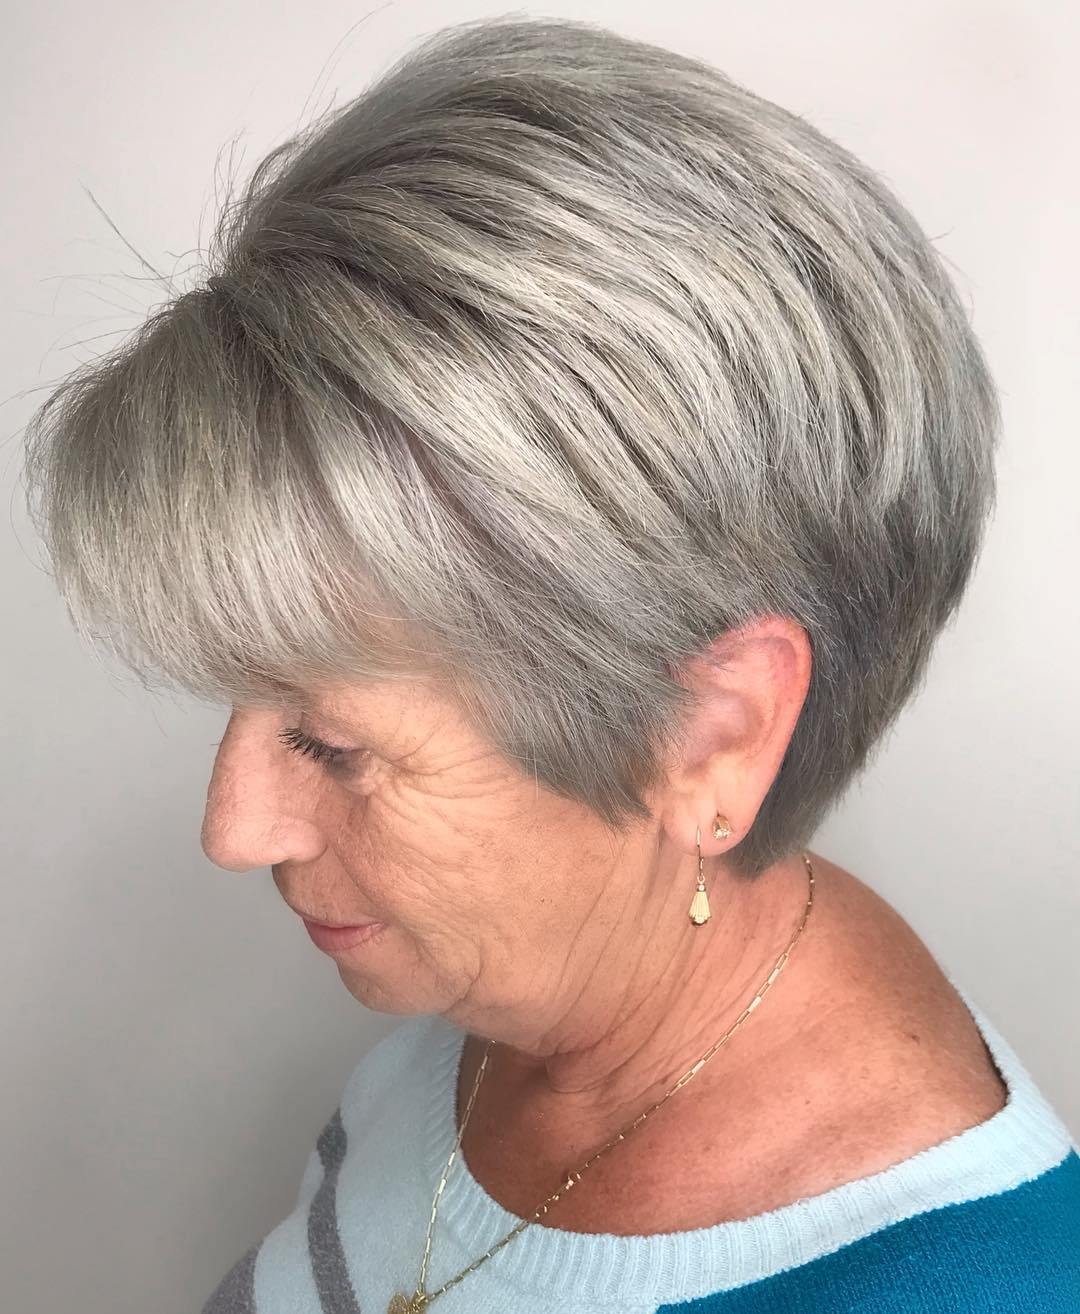 35 Gray Hair Styles To Get Instagram Worthy Looks In 2020